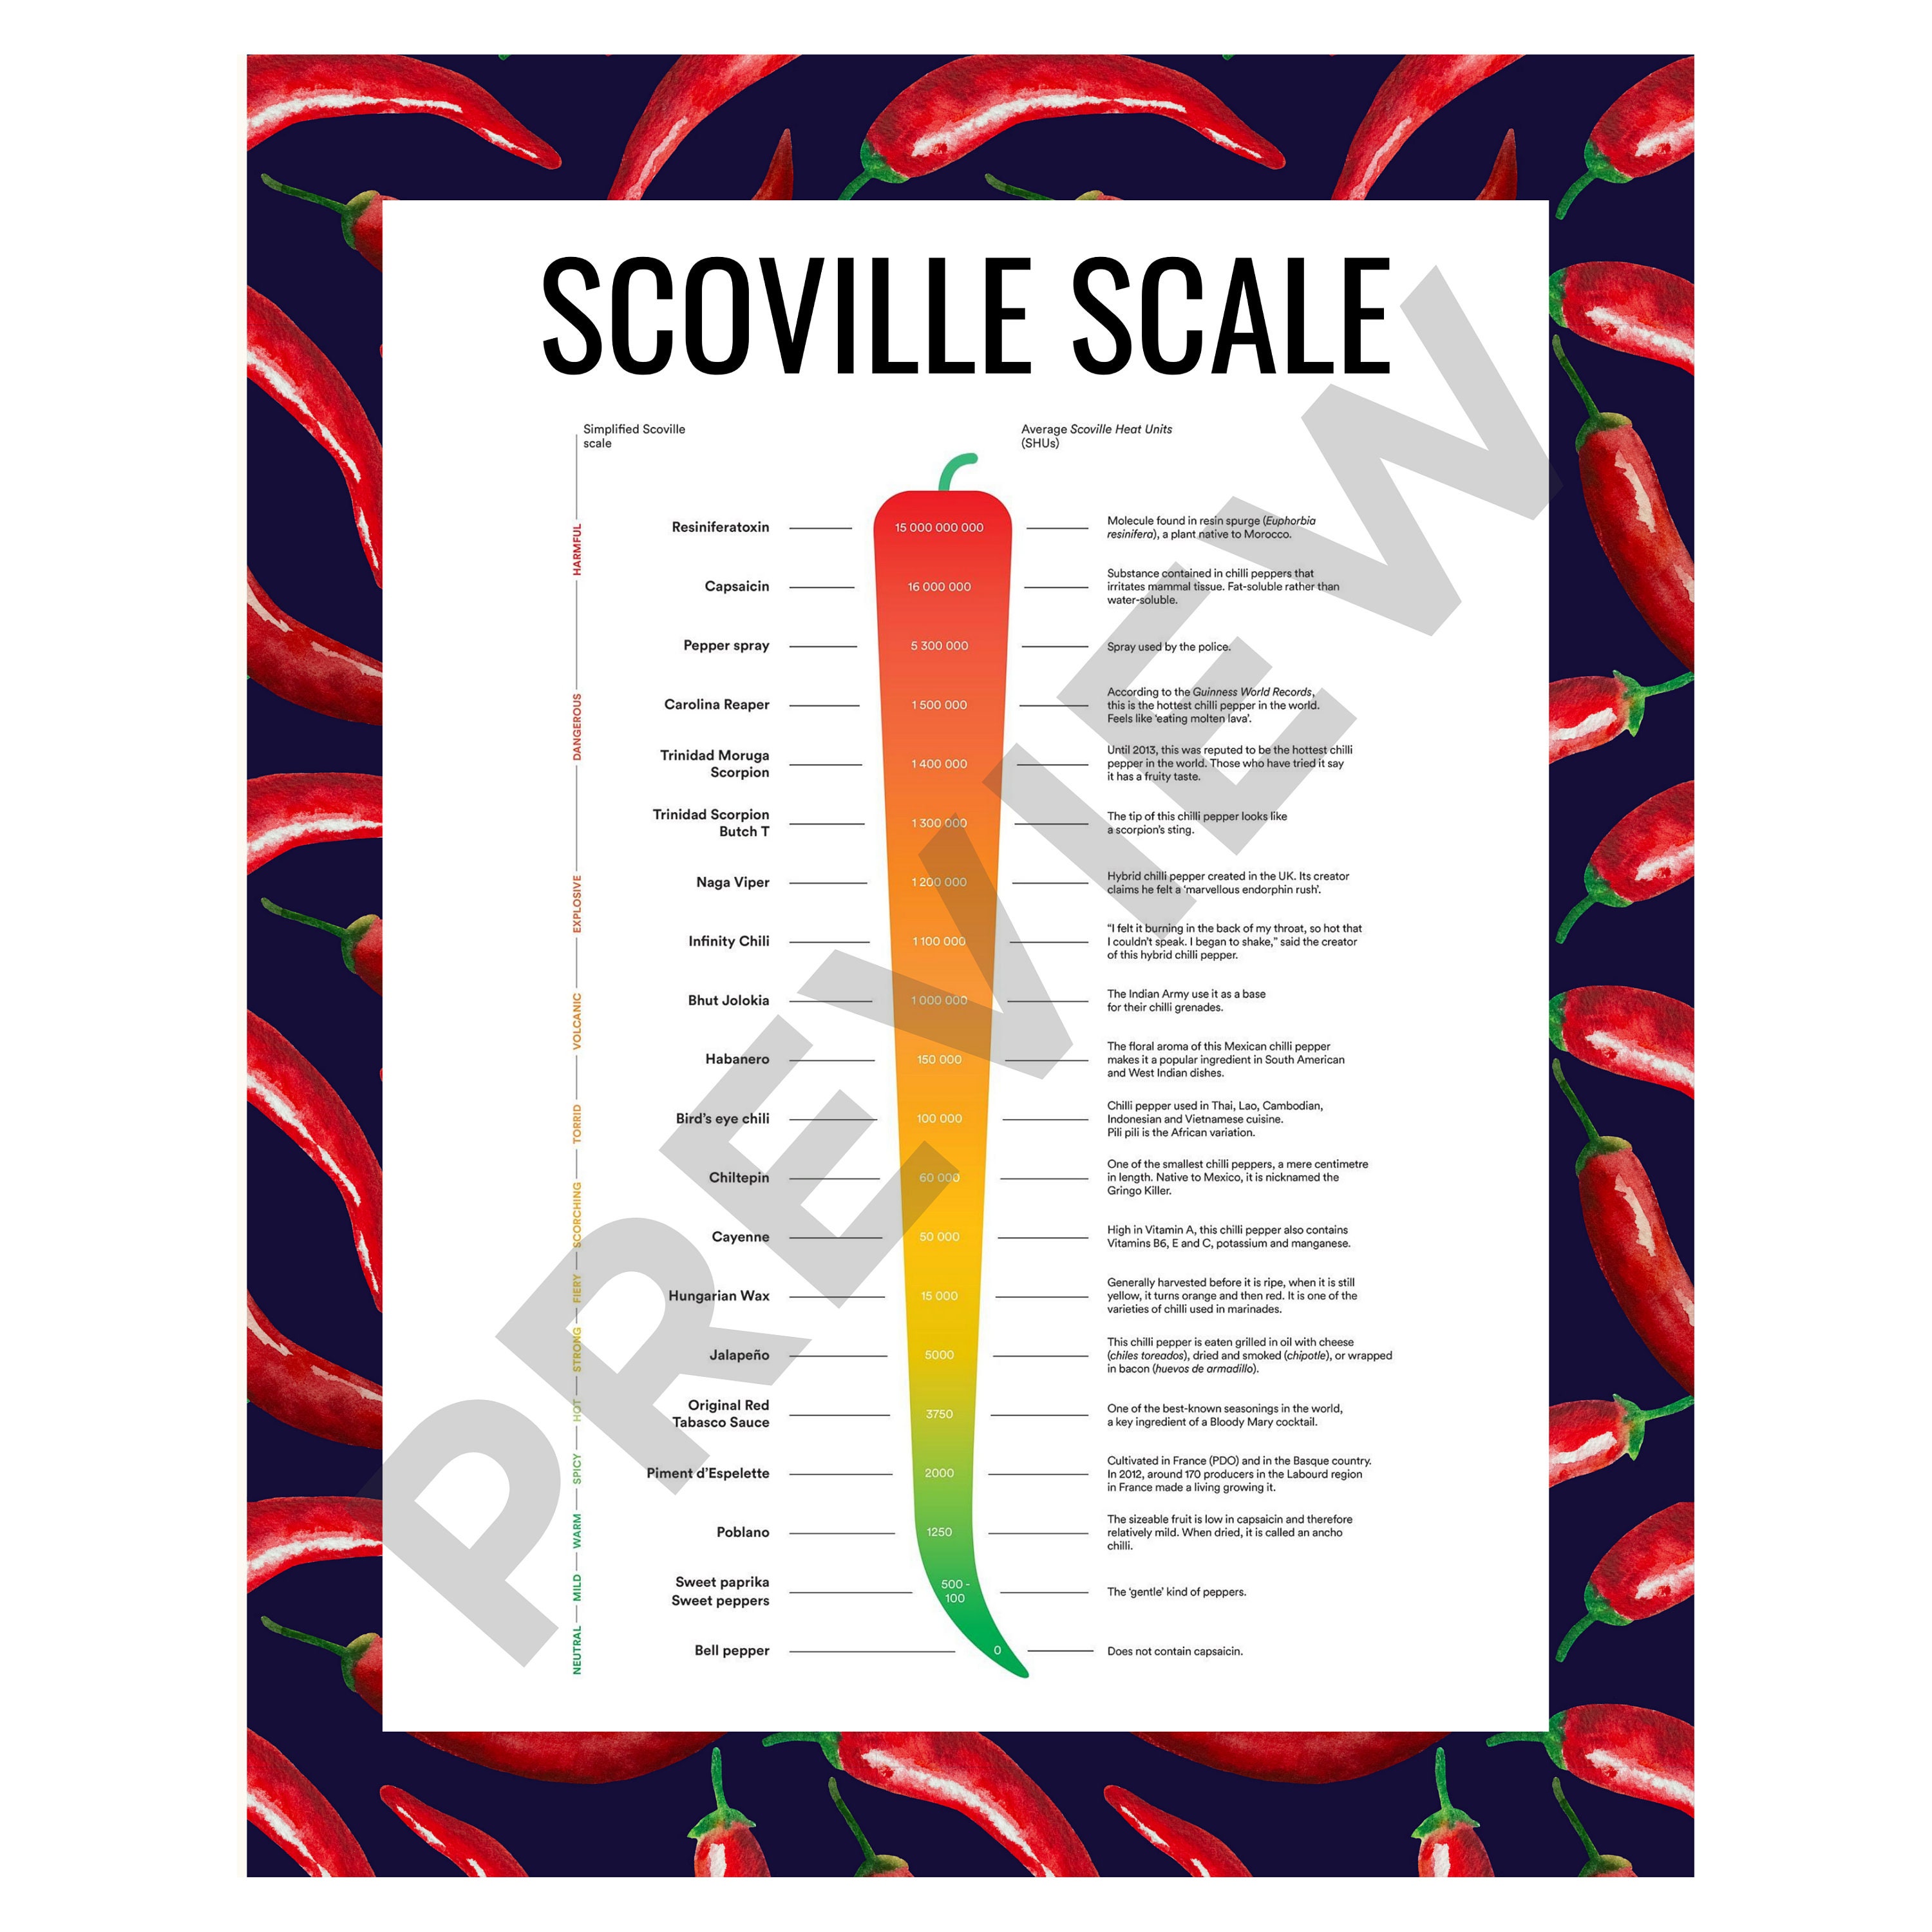 Scoville scale explained. : r/hotones